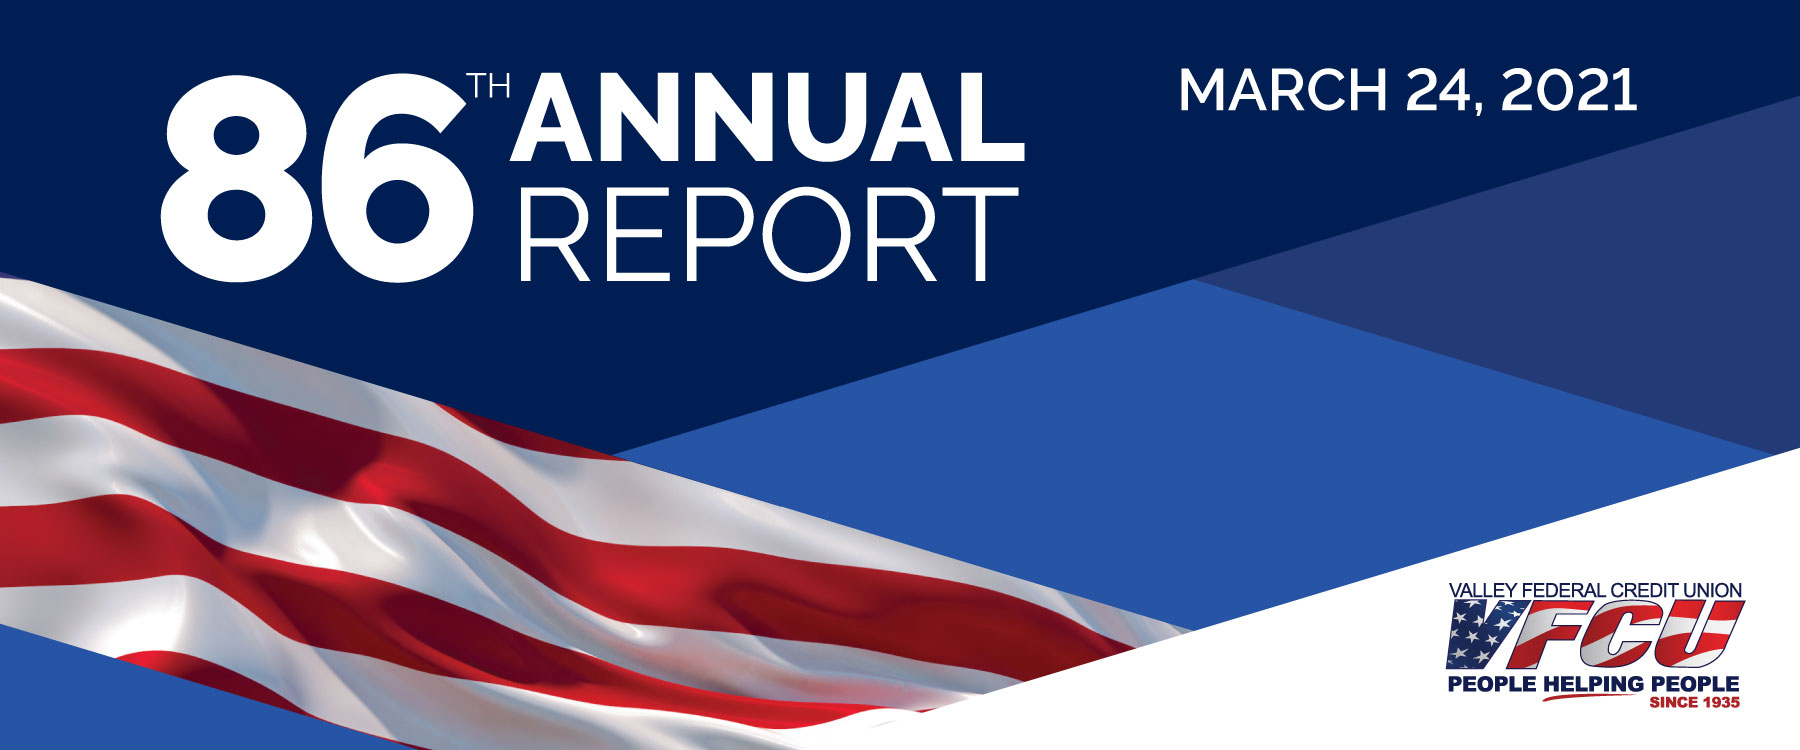 annual report slider - VFCU